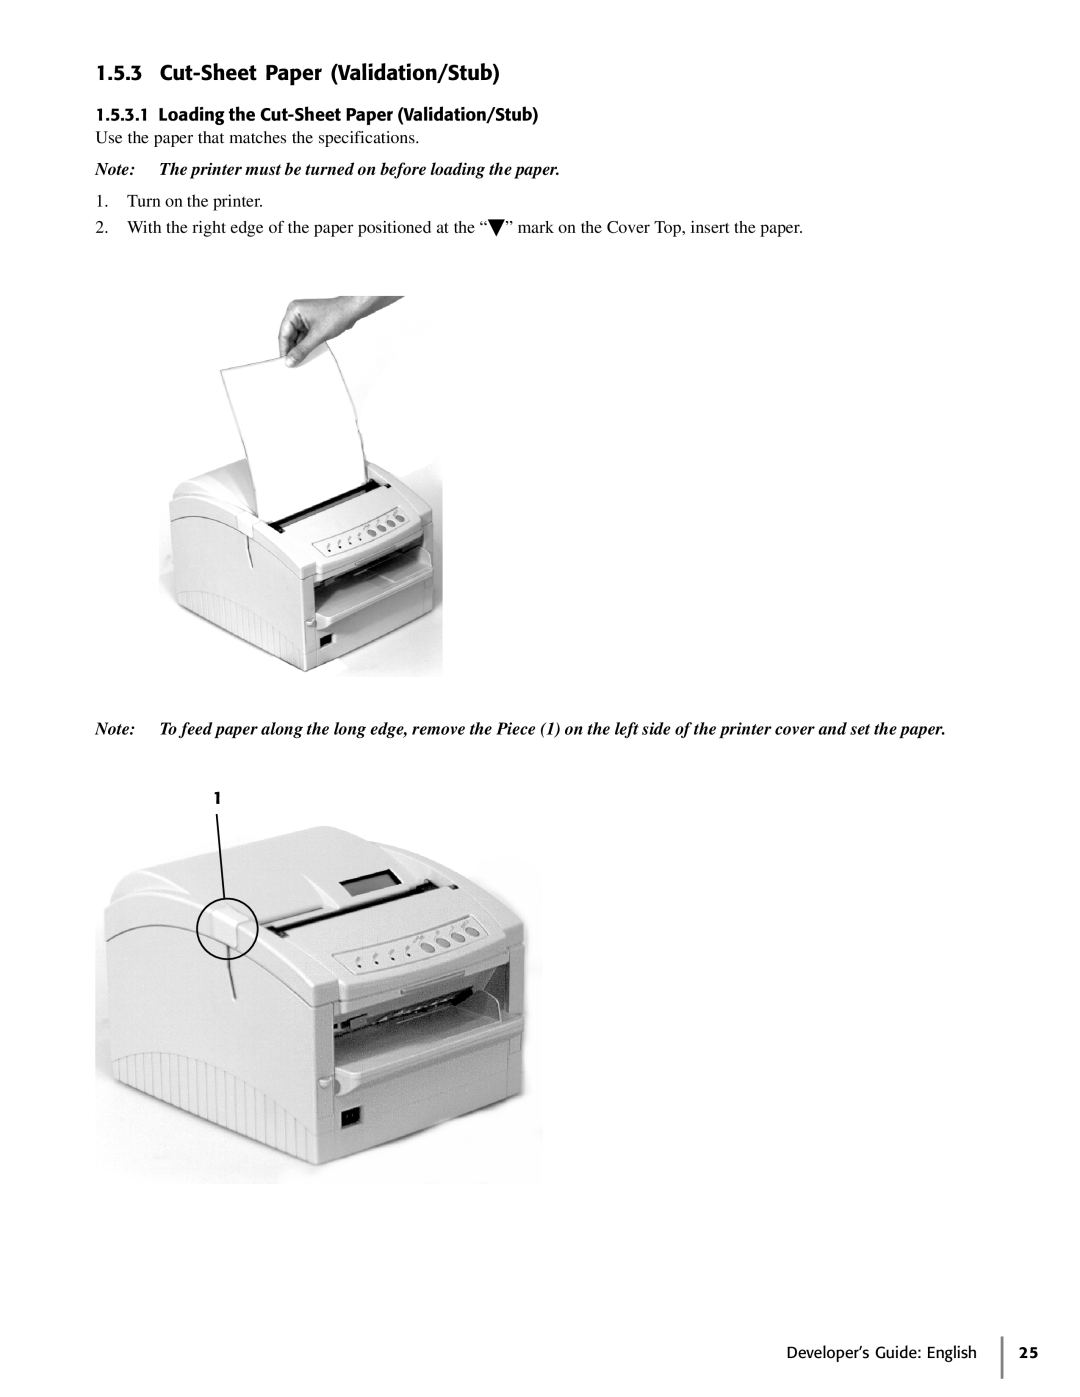 Oki 425D manual Loading the Cut-Sheet Paper Validation/Stub, Developer’s Guide English 